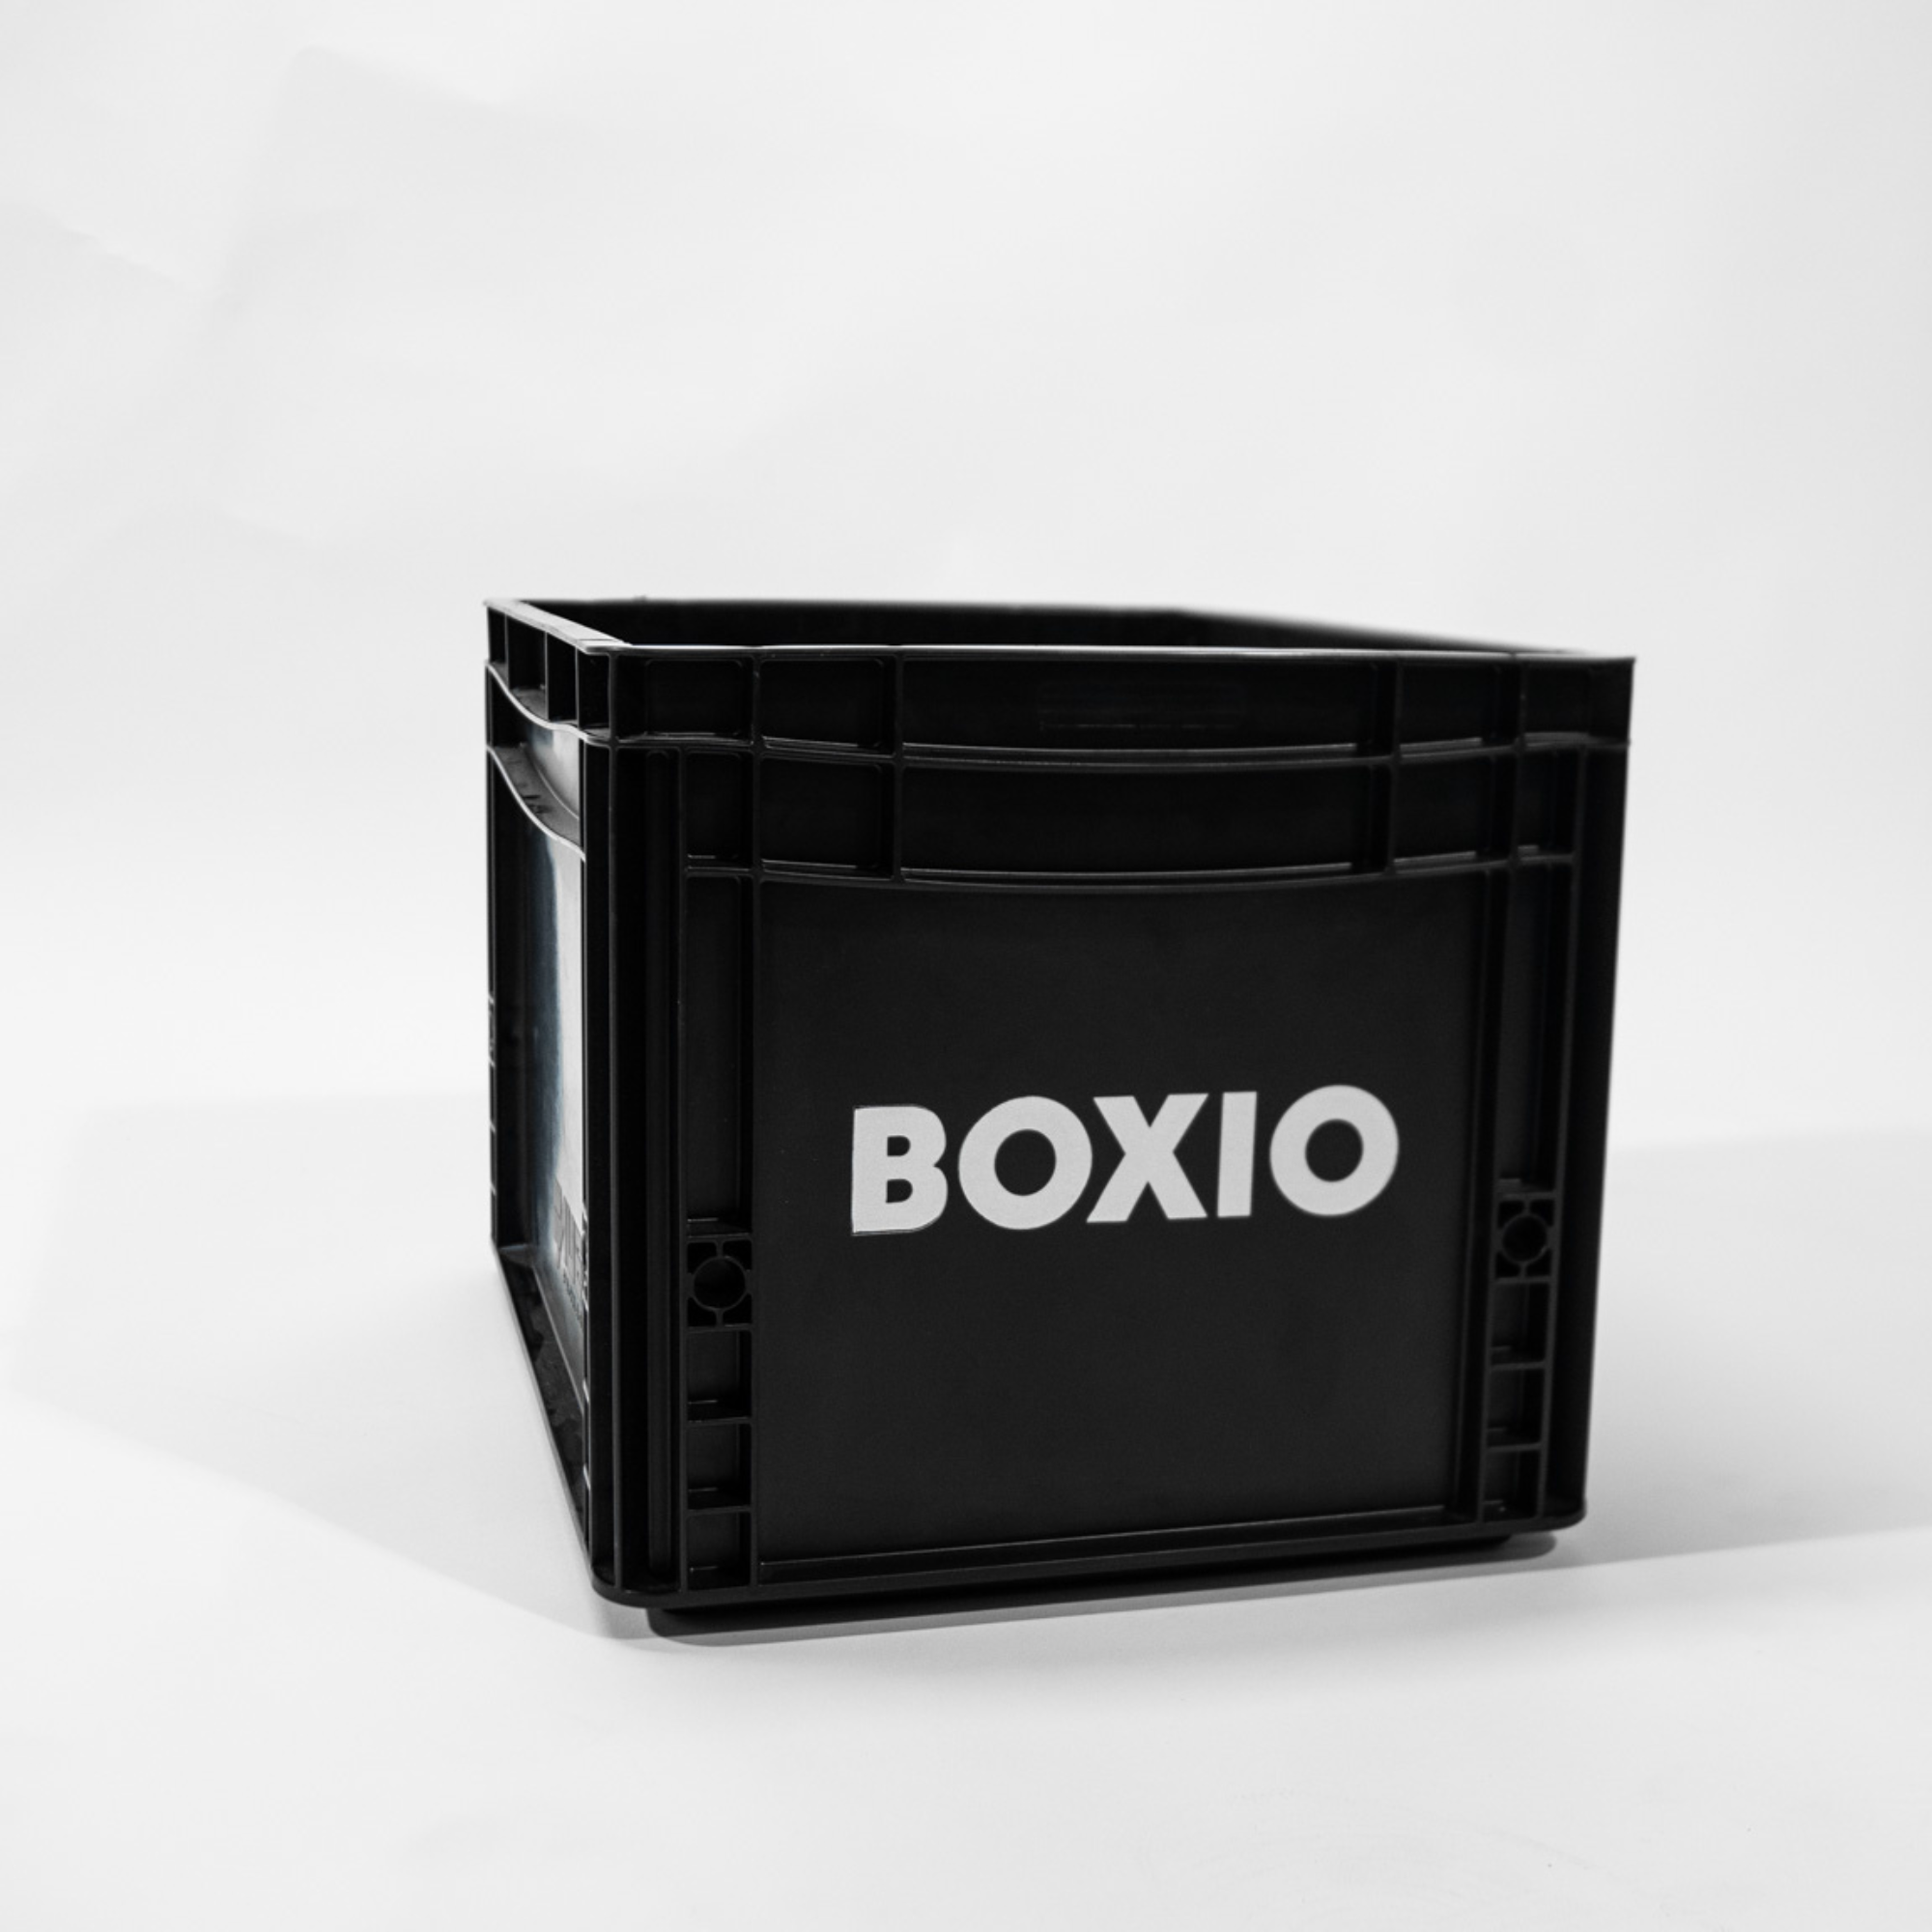 BOXIO - TOILET UP